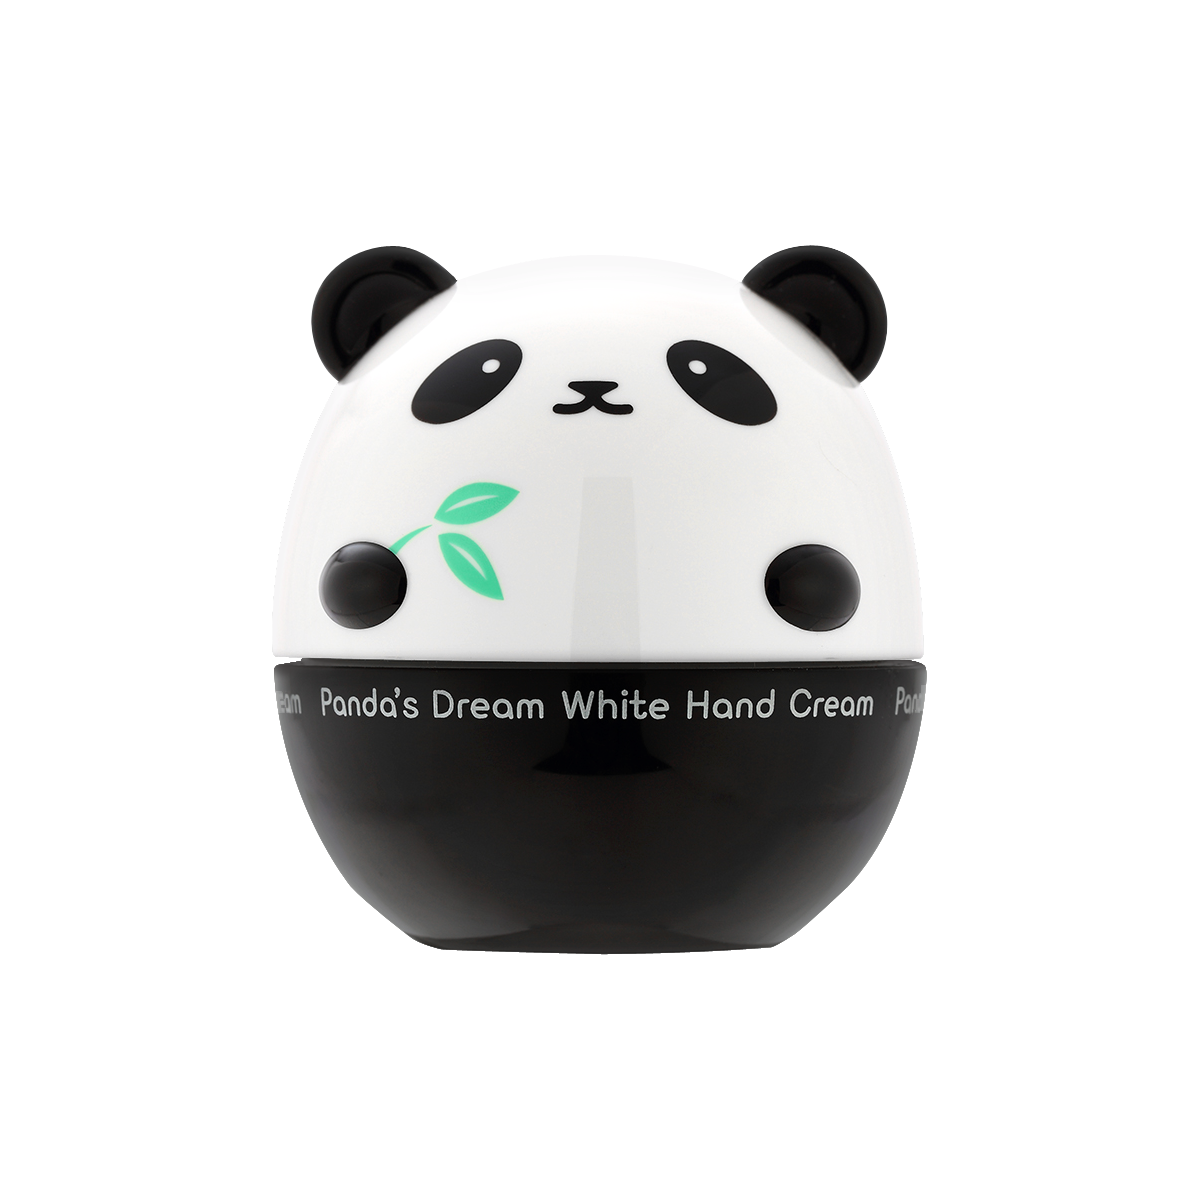 TONYMOLY Panda's Dream White Hand Cream Montreal Canada thekshop.ca